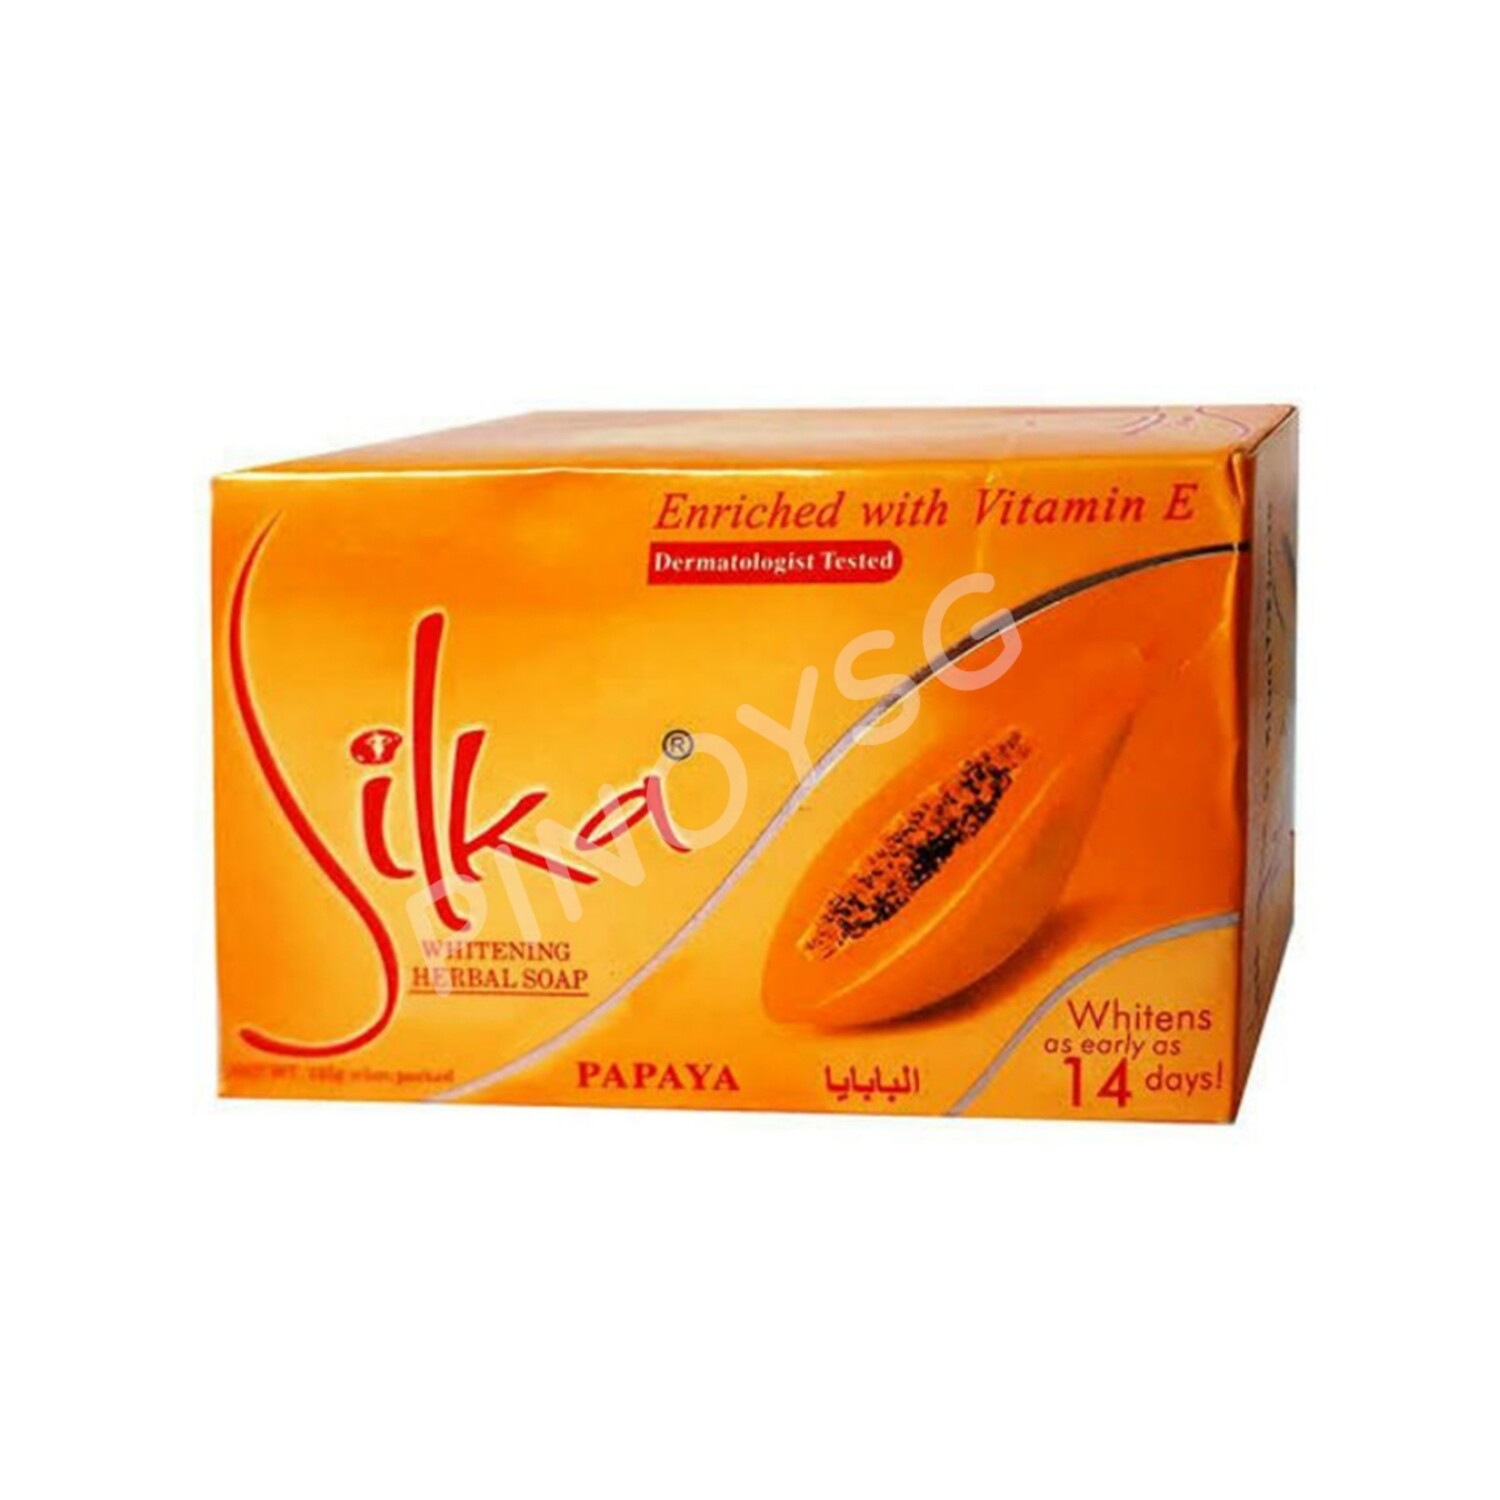 Silka Whitening Soap Papaya Orange 135g